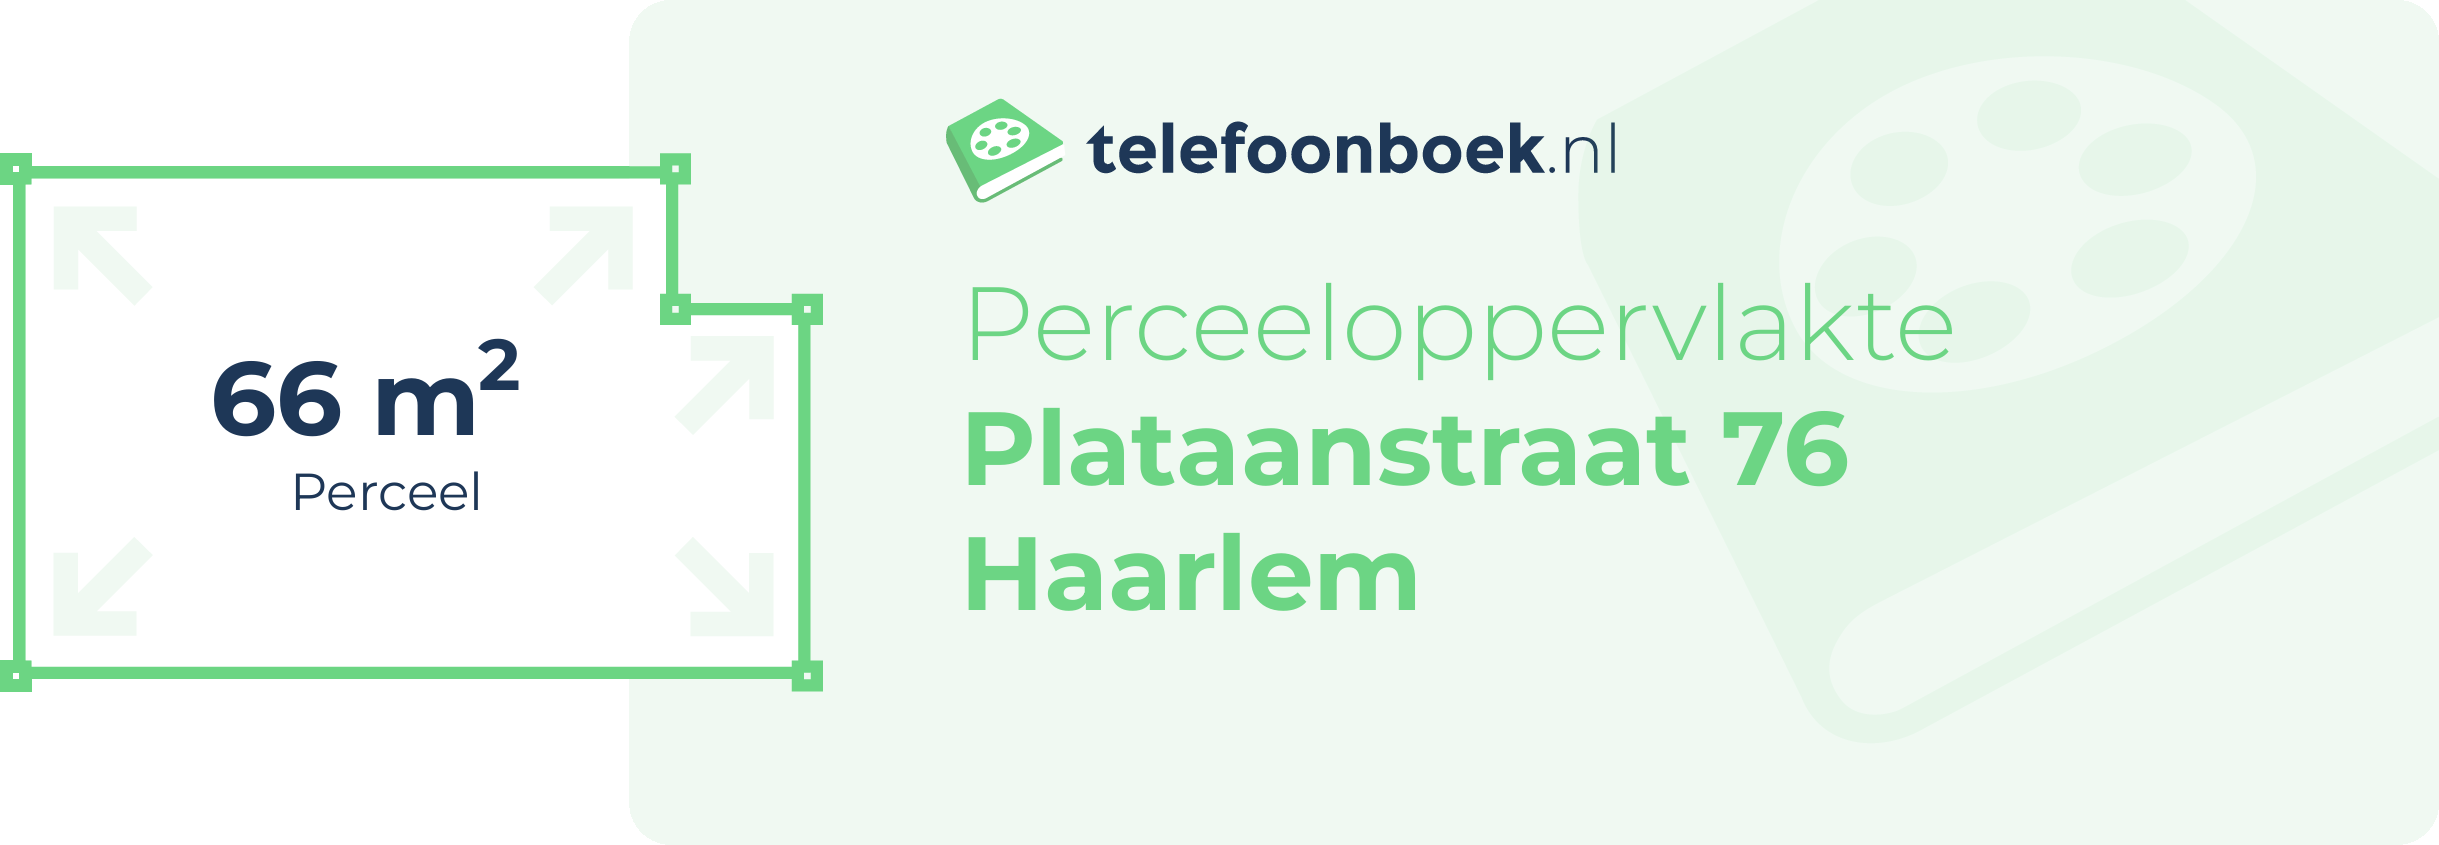 Perceeloppervlakte Plataanstraat 76 Haarlem